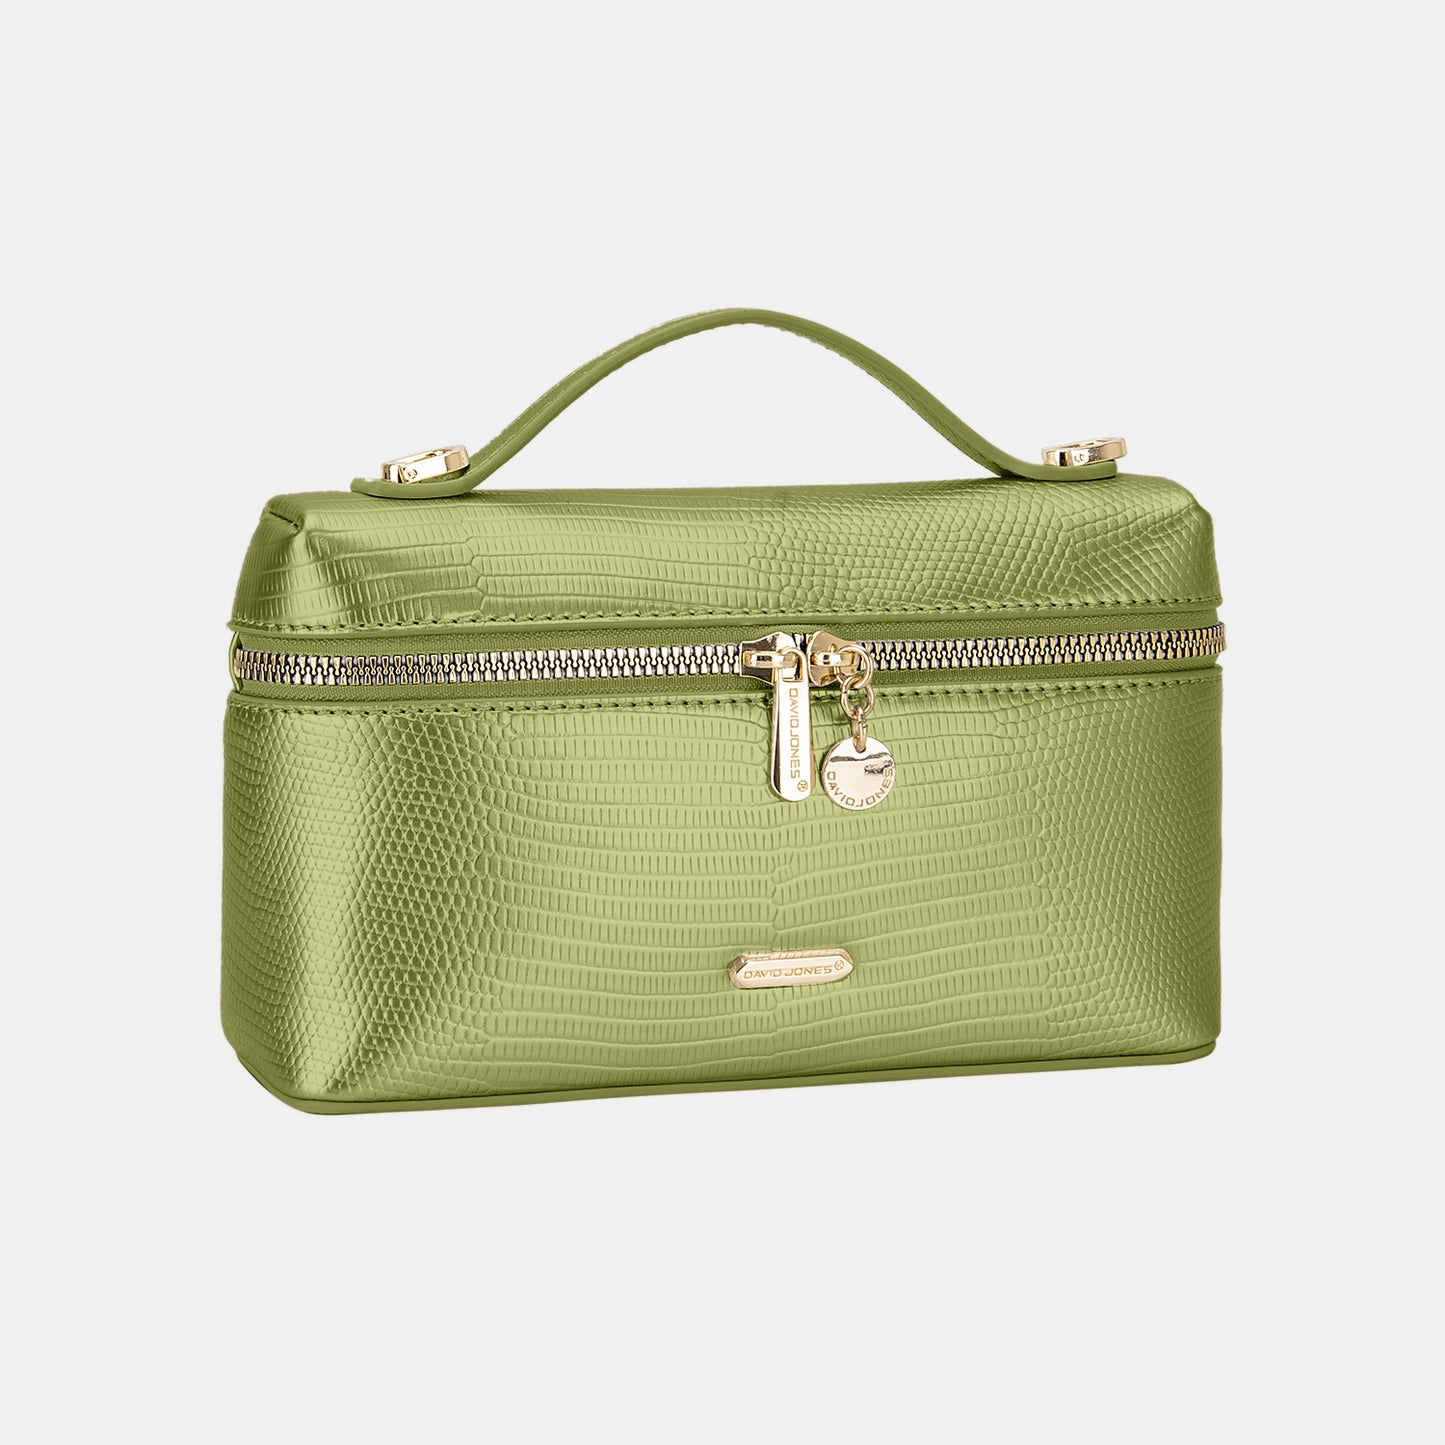 David Jones Texture PU Leather Handbag Olive Green One Size 